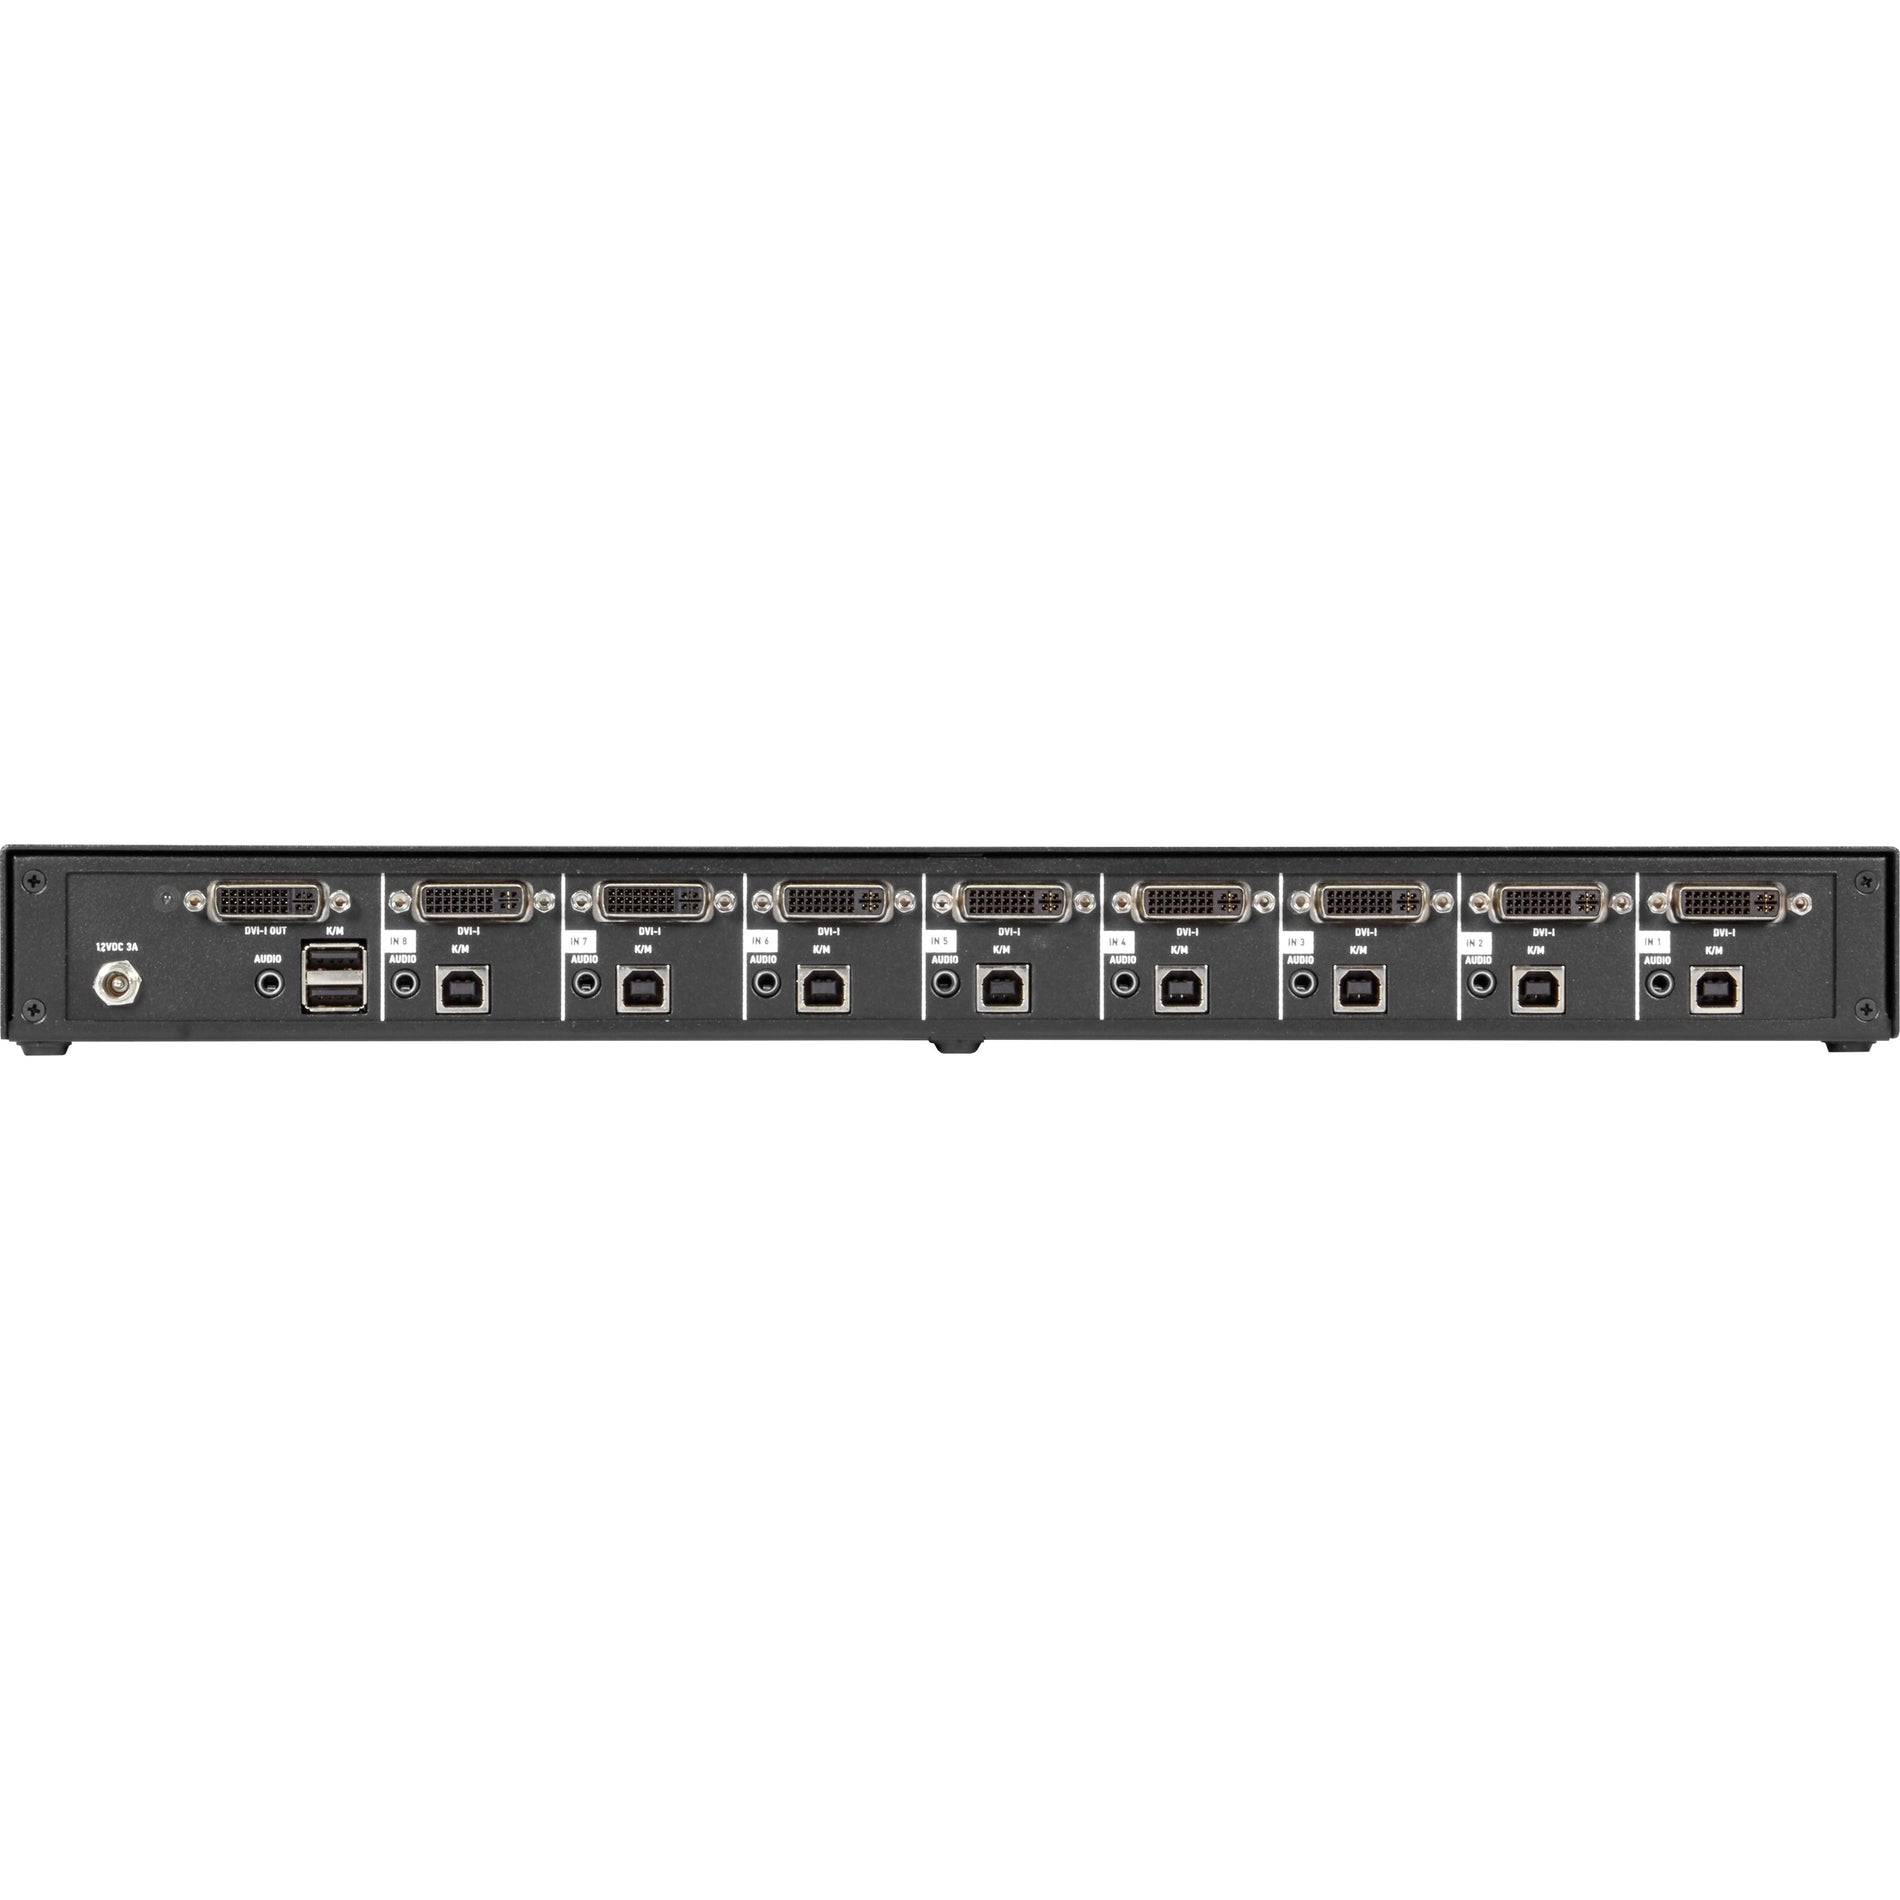 Black Box SS8P-SH-DVI-U NIAP 3.0 Secure 8-Port Single-Head DVI-I KVM Switch, 3840 x 2160 Resolution, 3 Year Warranty